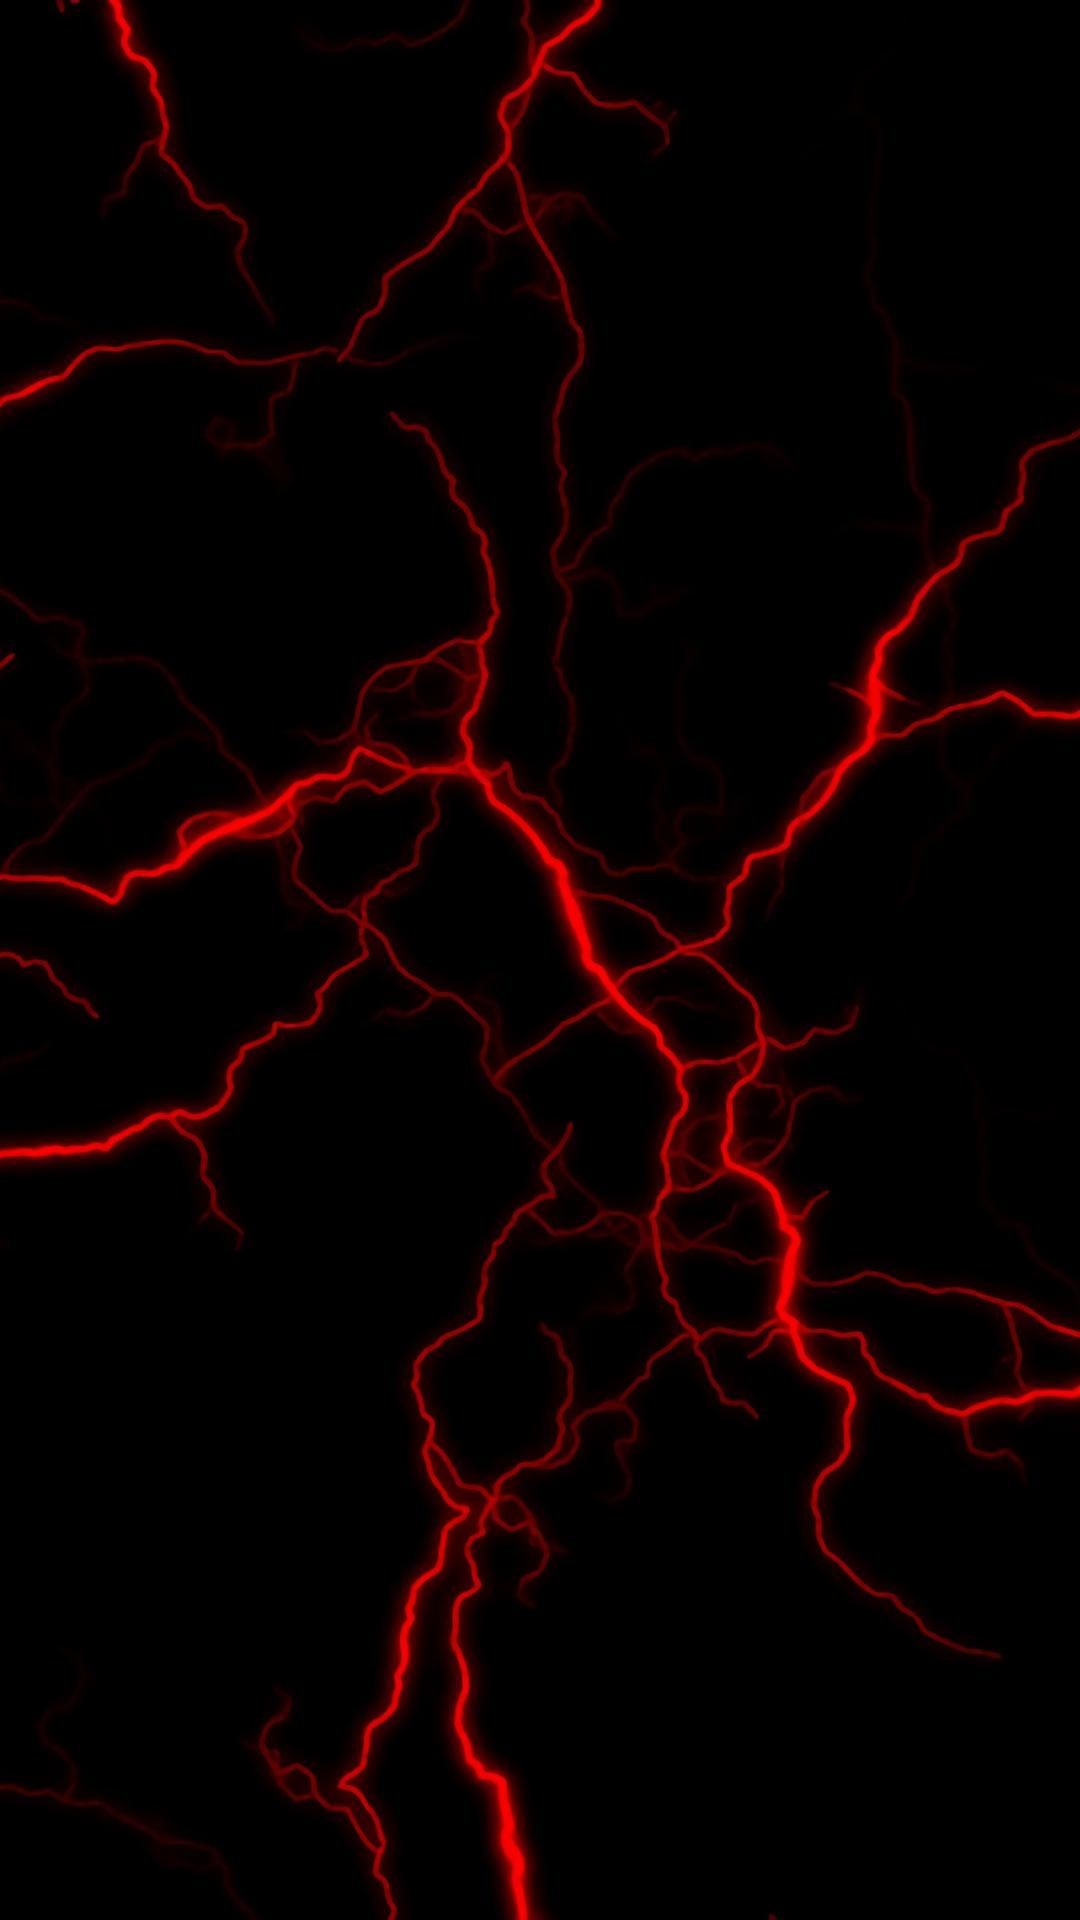 1080x1920 Red lightning bolt wallpaper, background